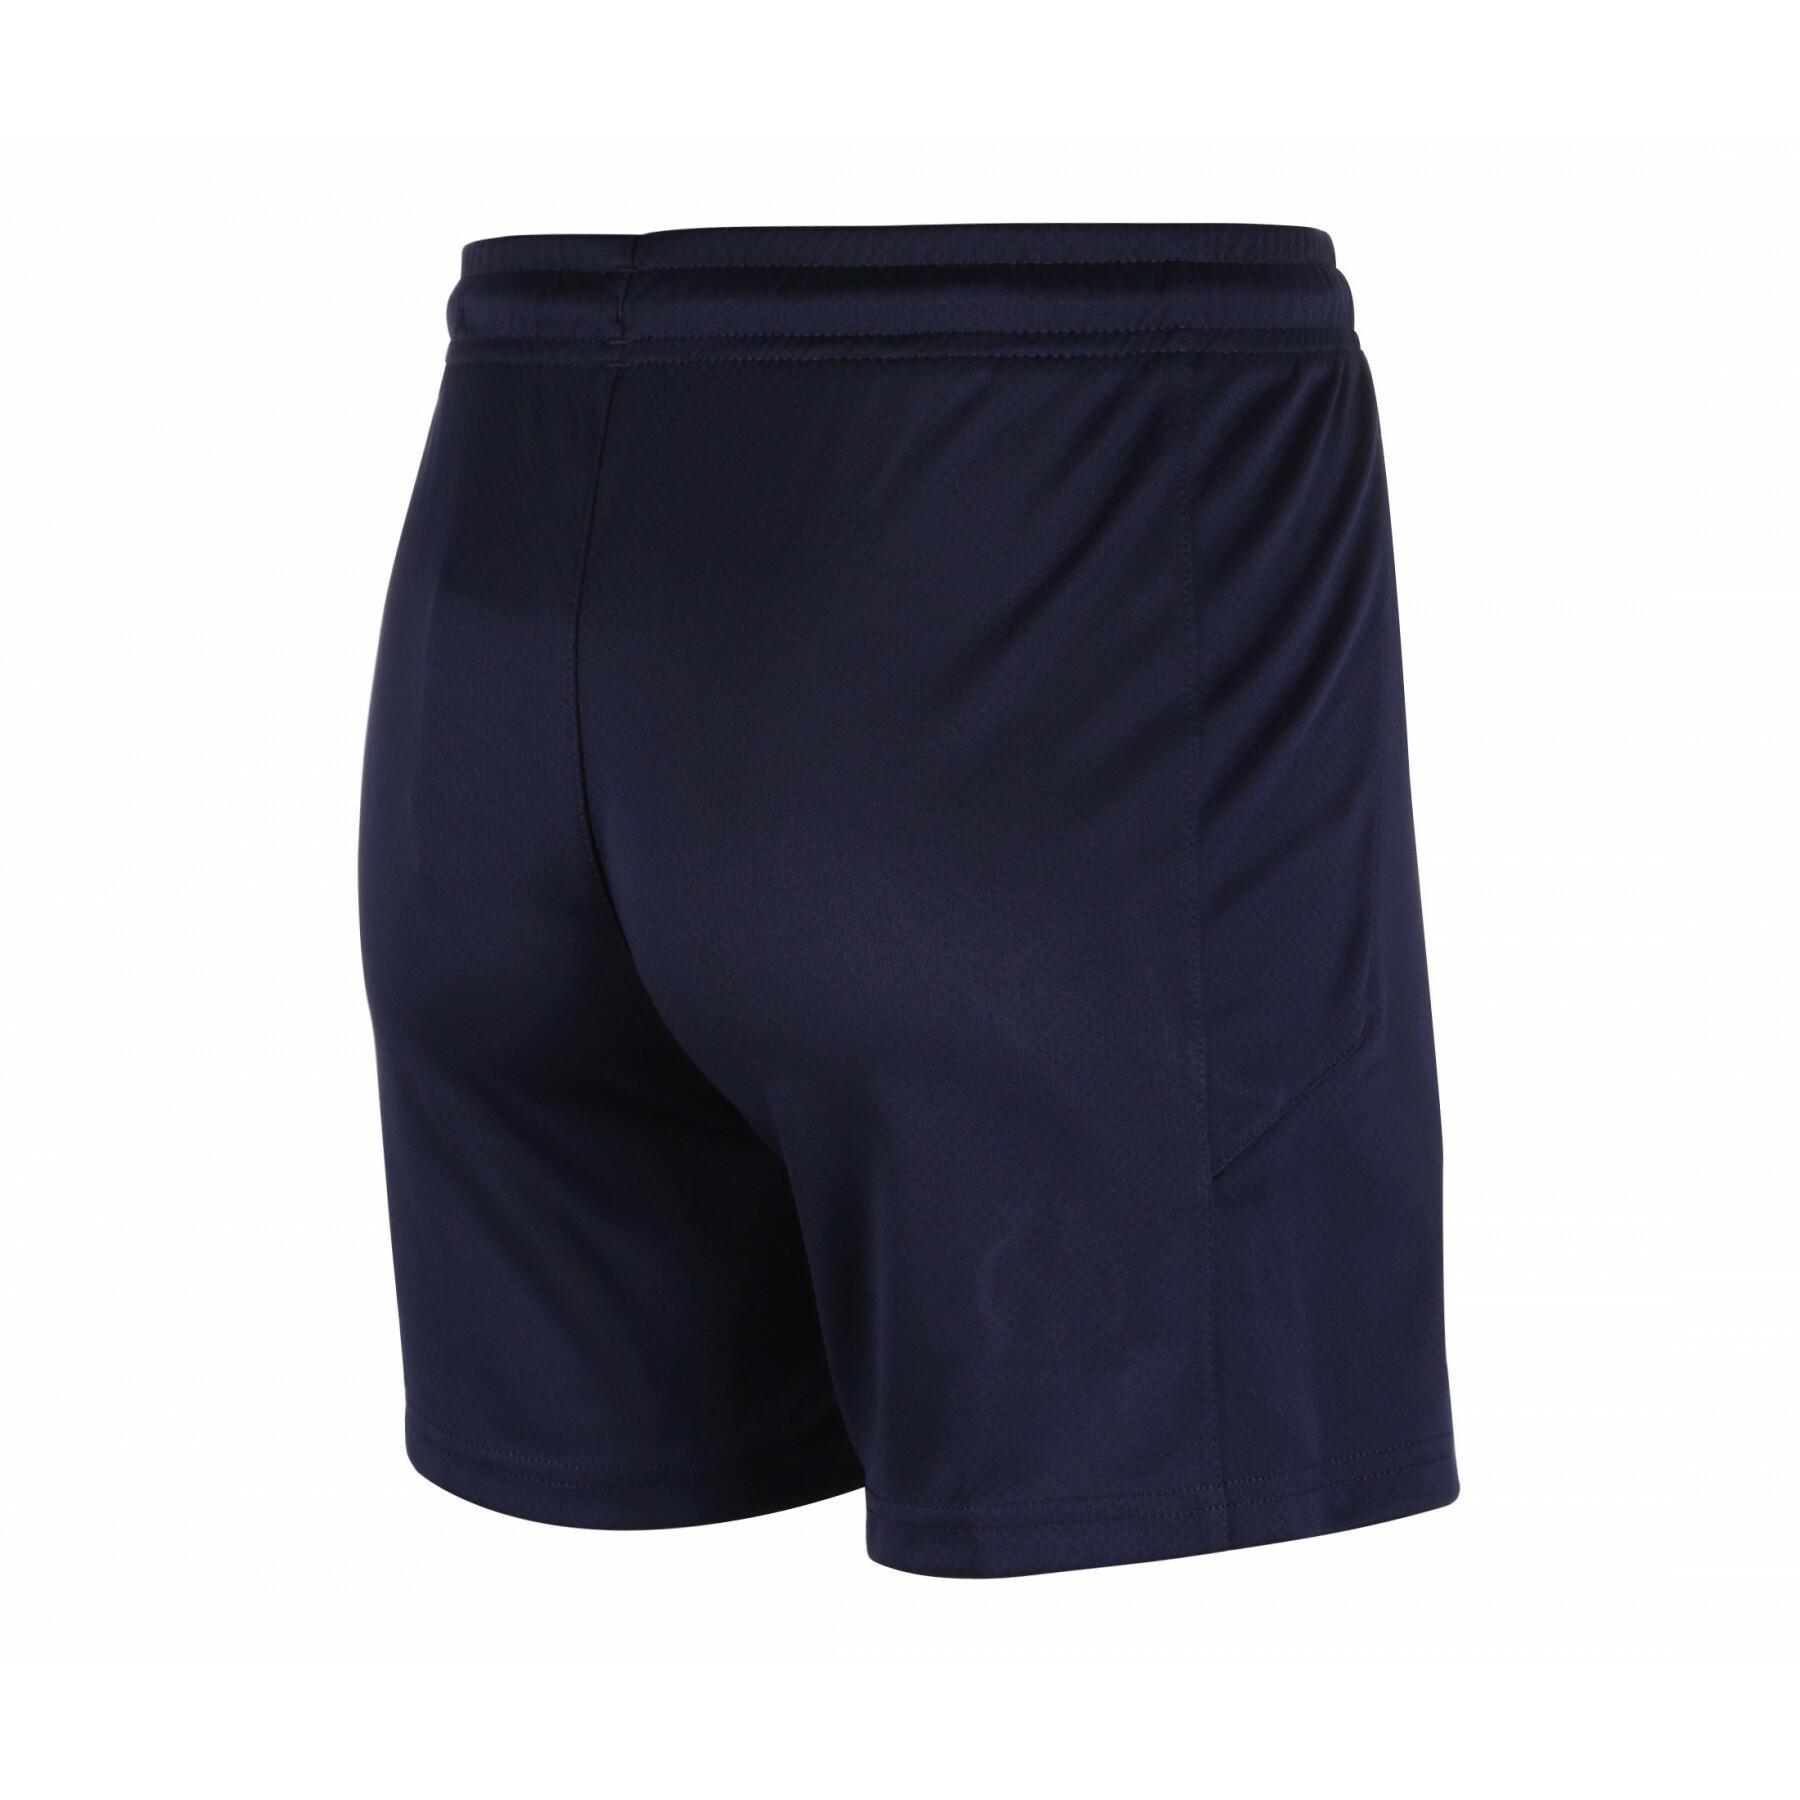 Children's outdoor shorts OM 2020/21